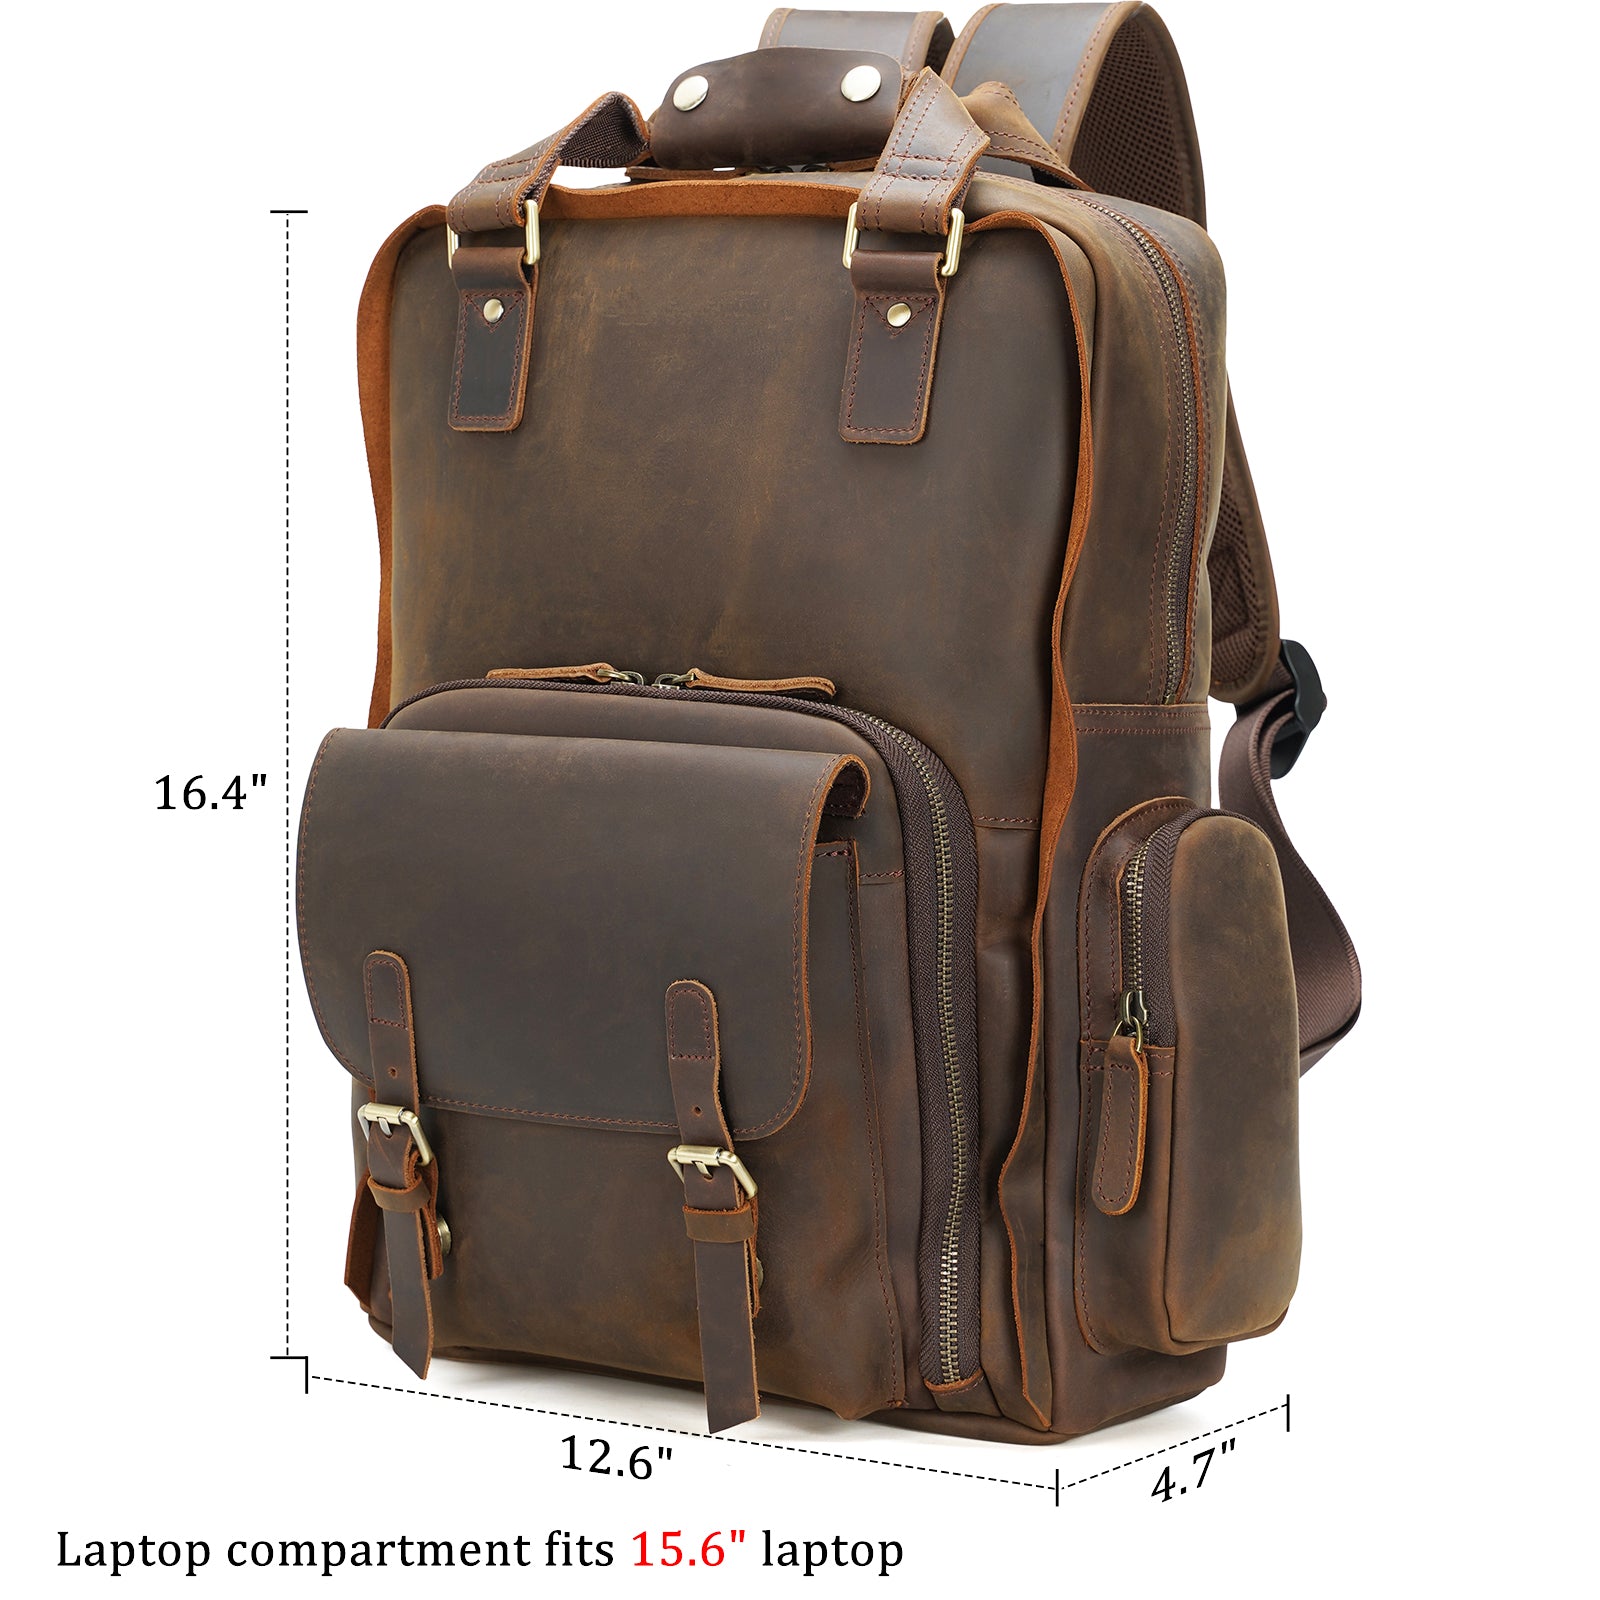 Jute Laptop Bag - Buy best laptop bag at wholesale